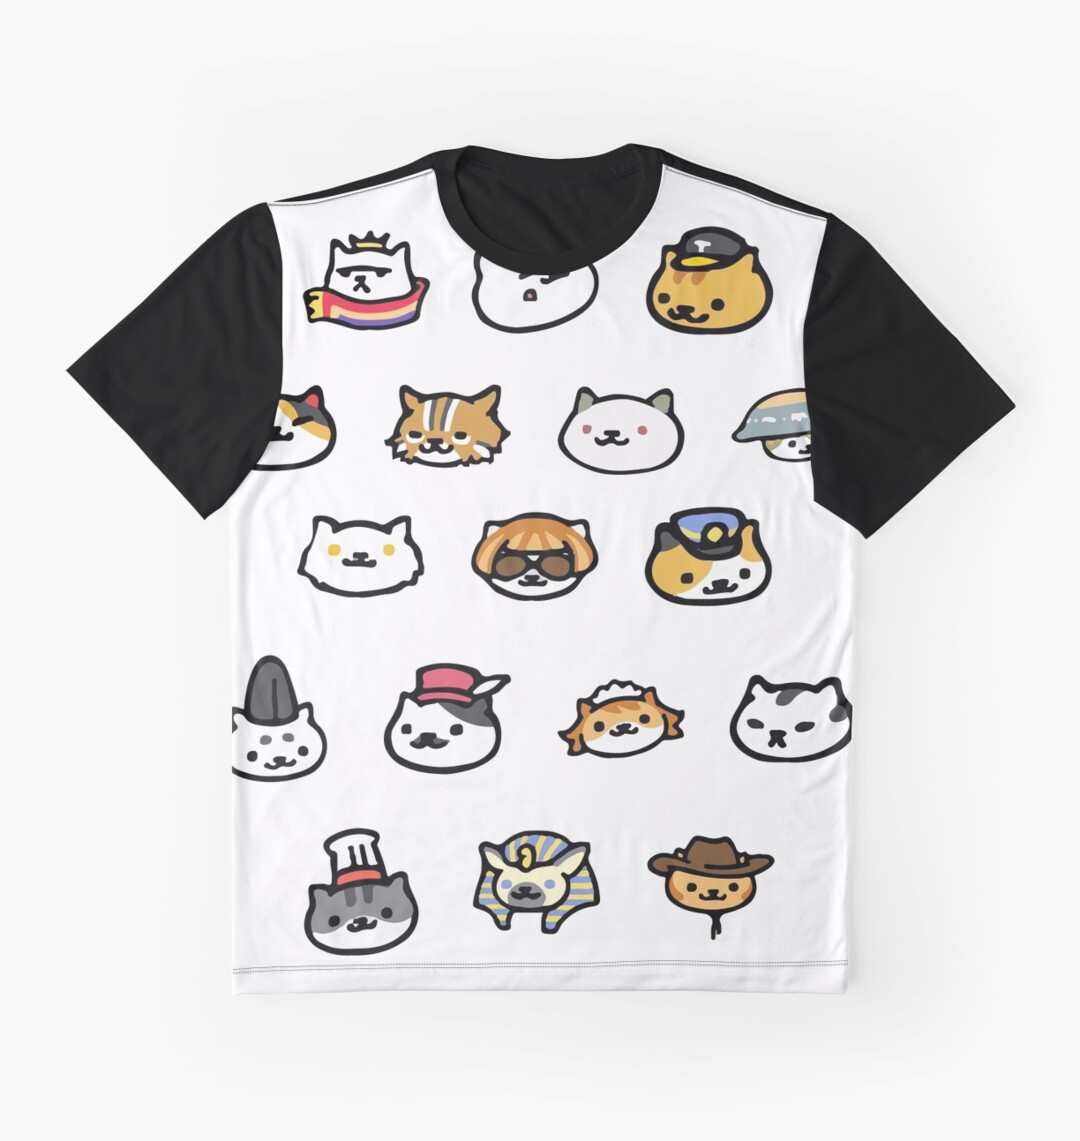 Neko Atsume Rare Cats!" Graphic T-Shirts by jjdough | Redbubble